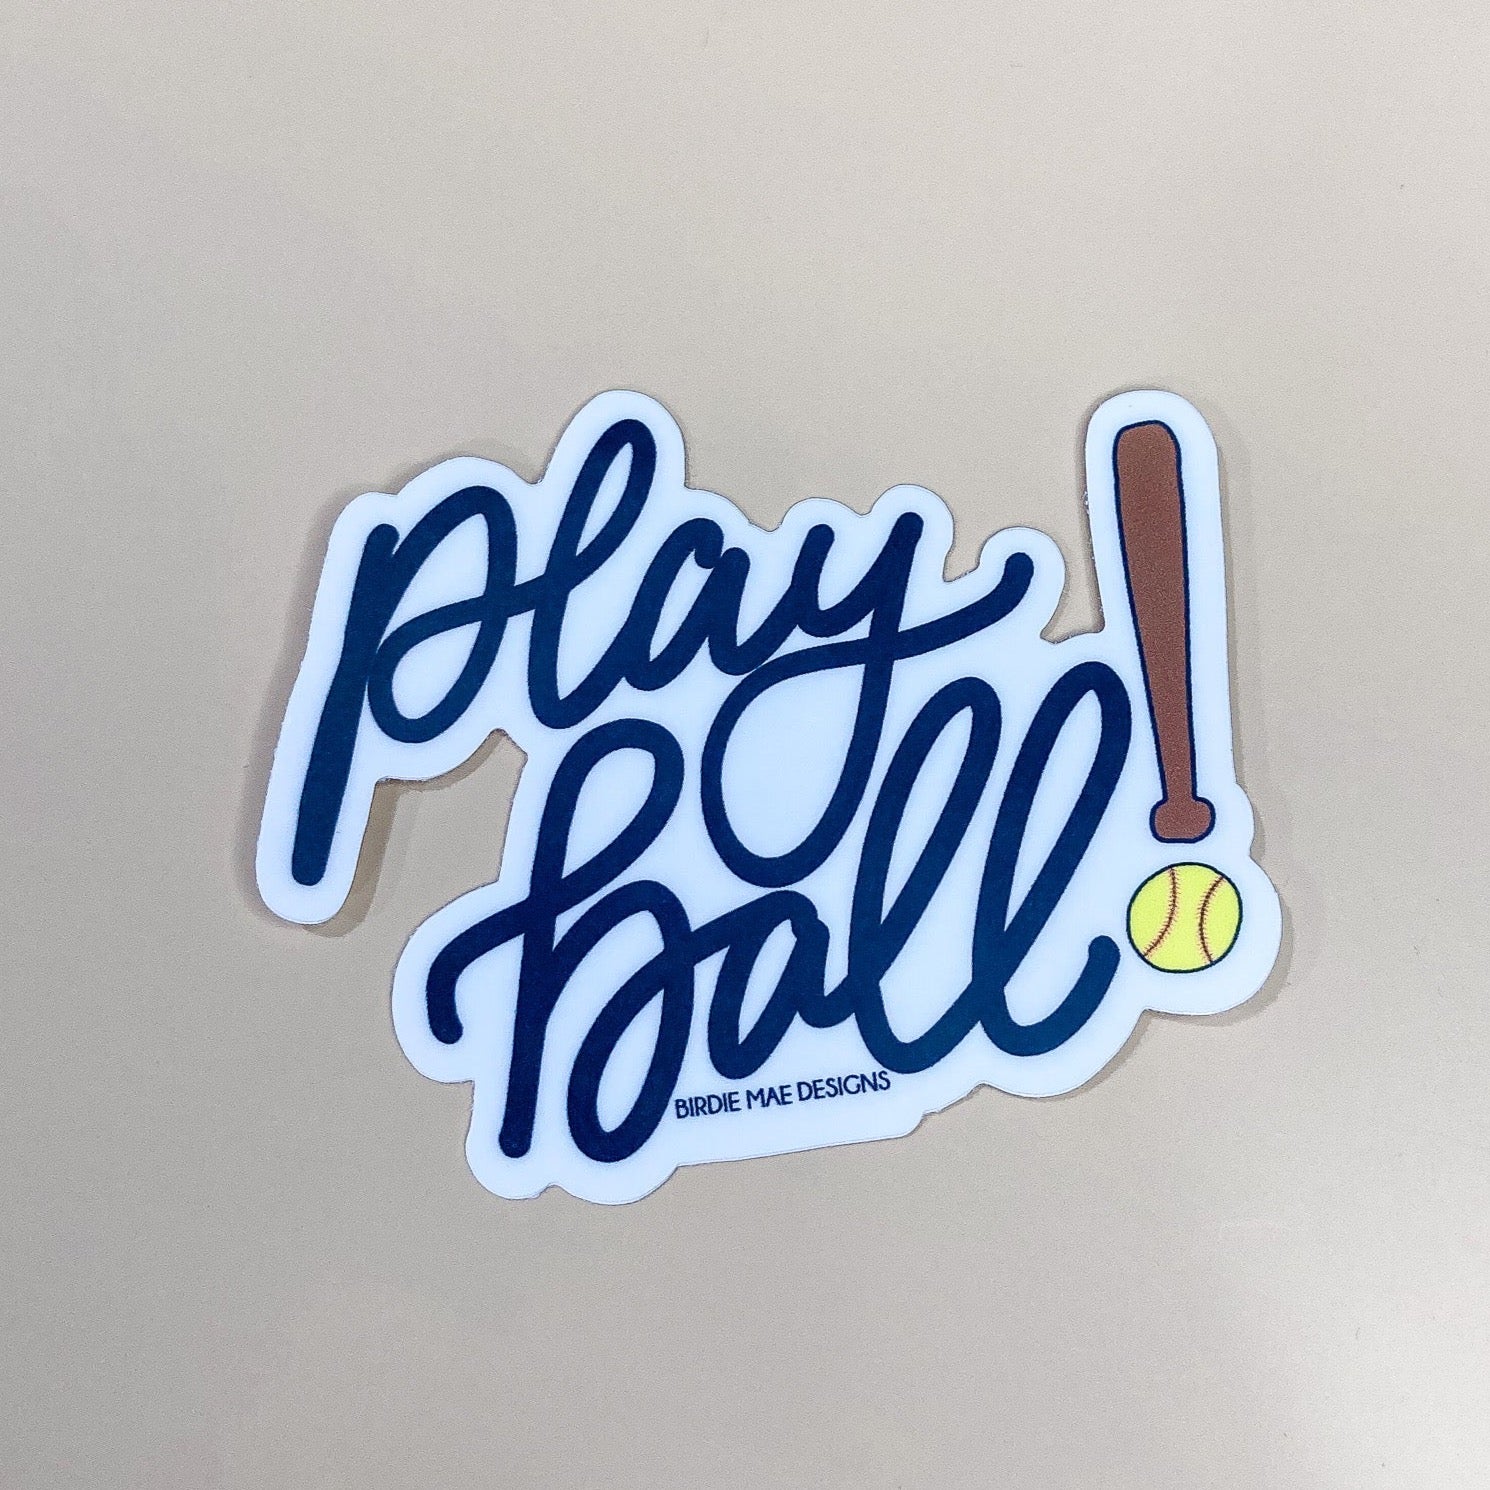 Softball 'Play Ball' Sticker, tumbler stickers